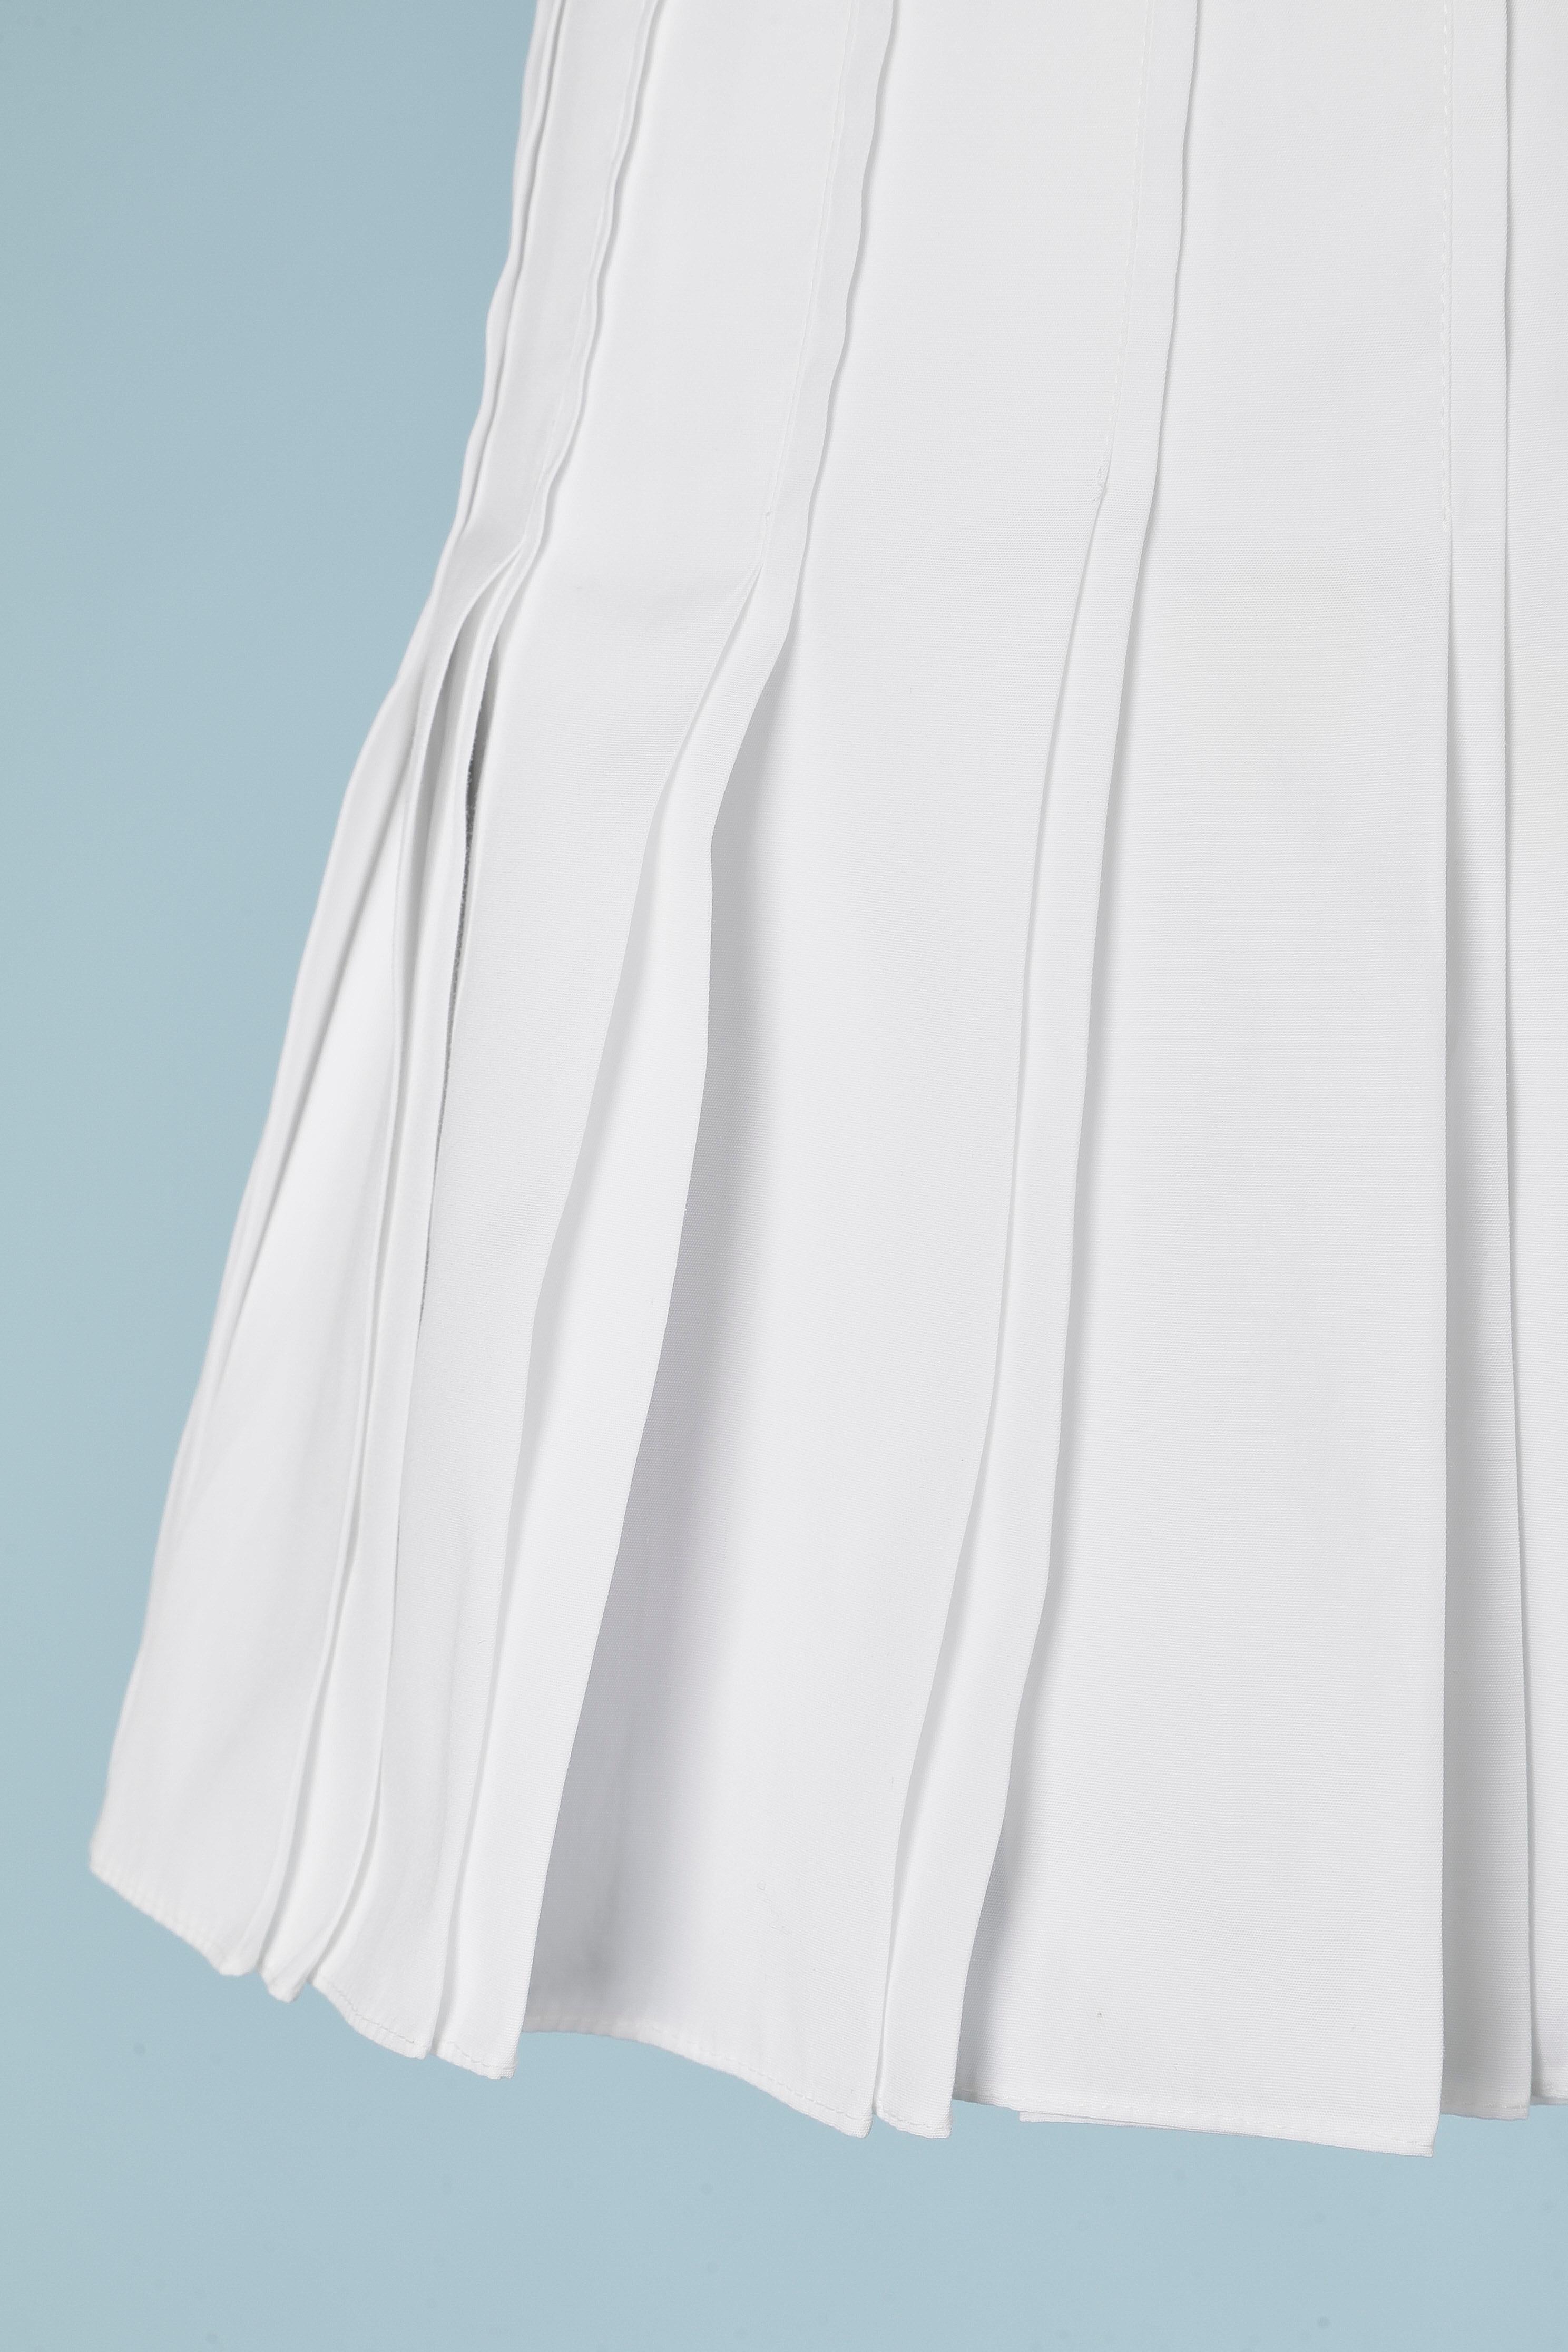 White cotton mini-skirt.
SIZE S